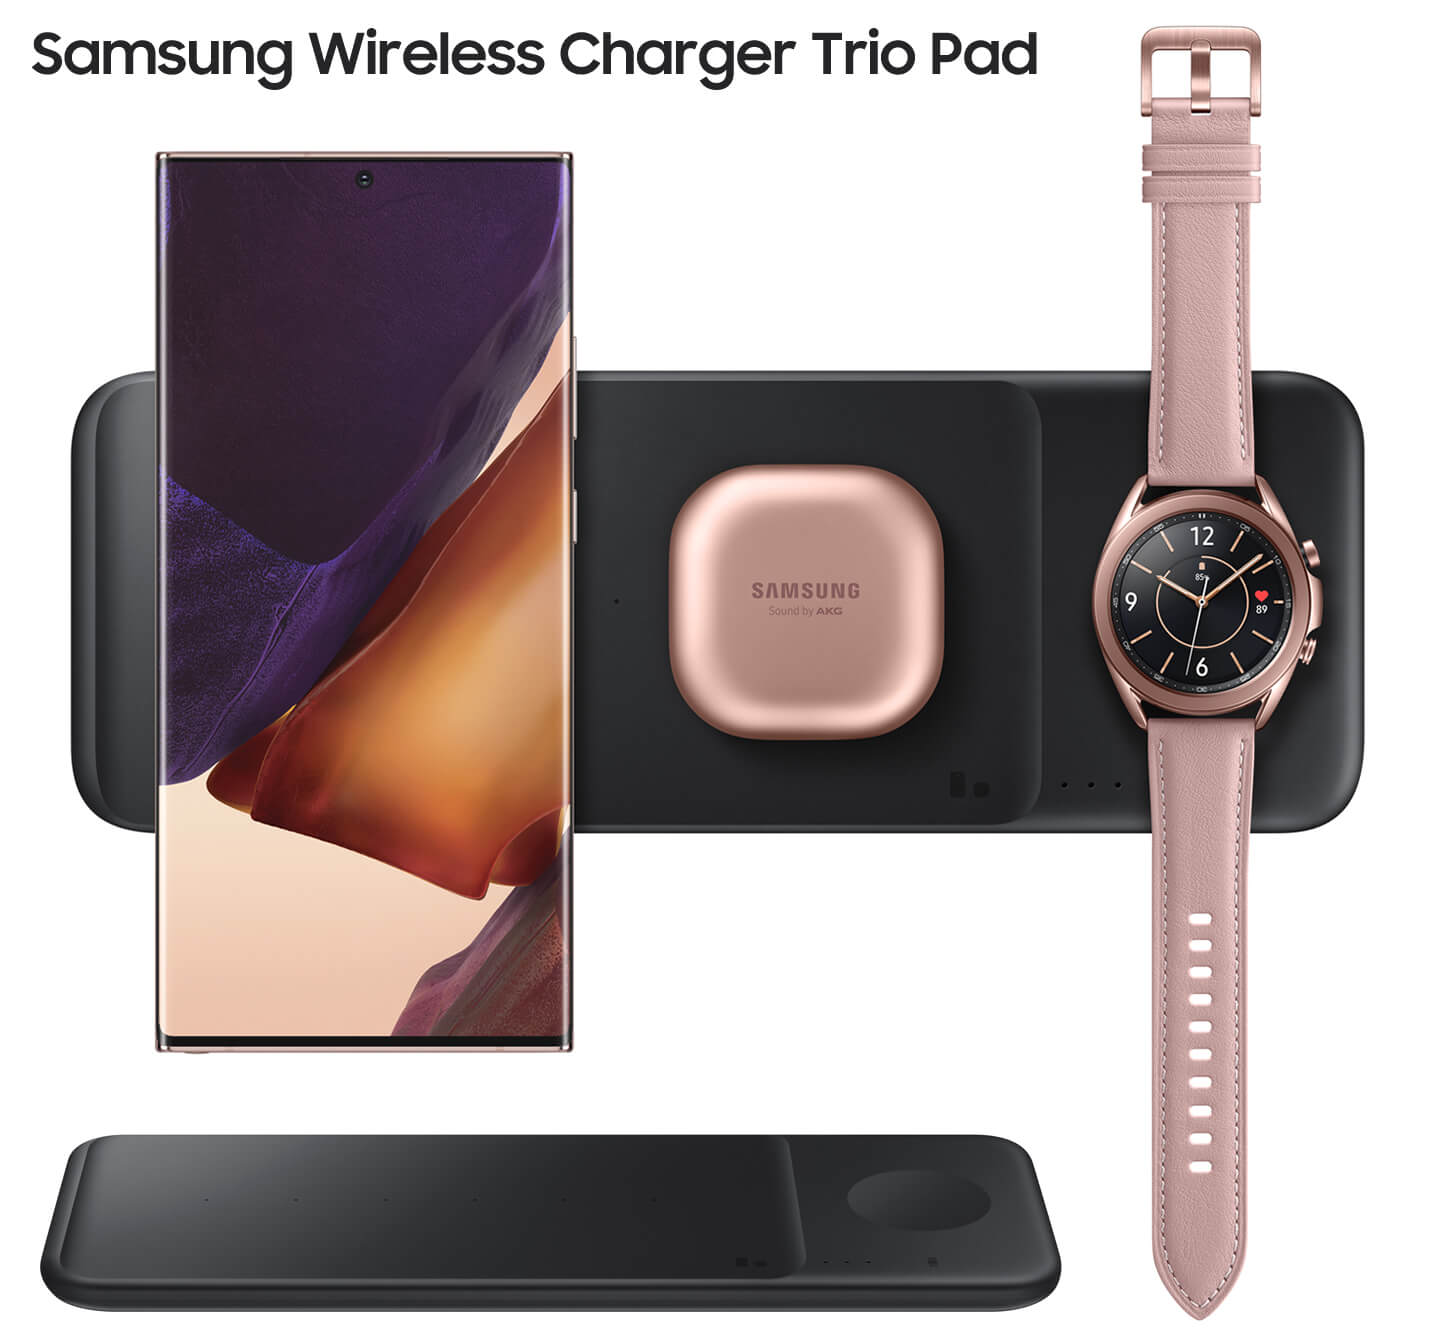 Samsung wireless charger trio